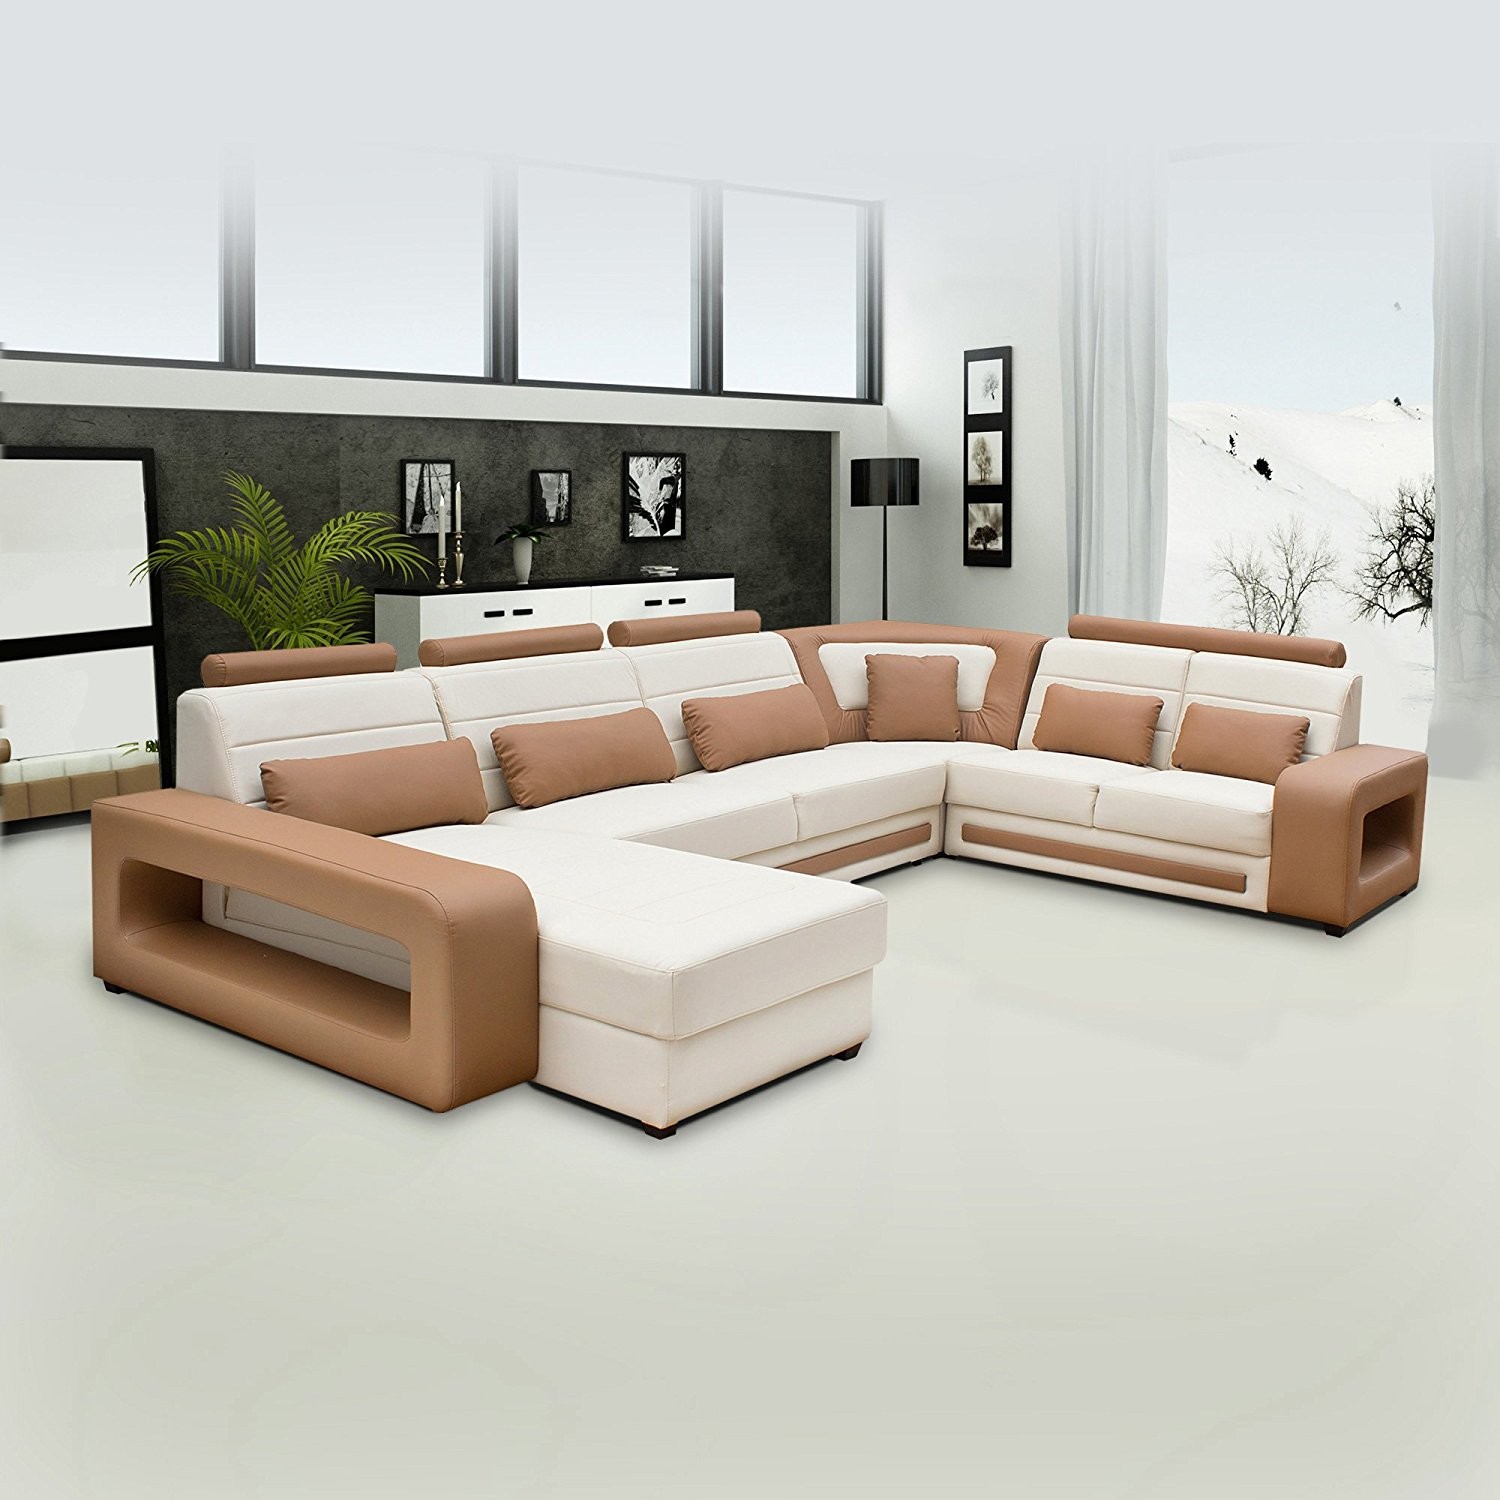 Modern Classic Fabric Sofa